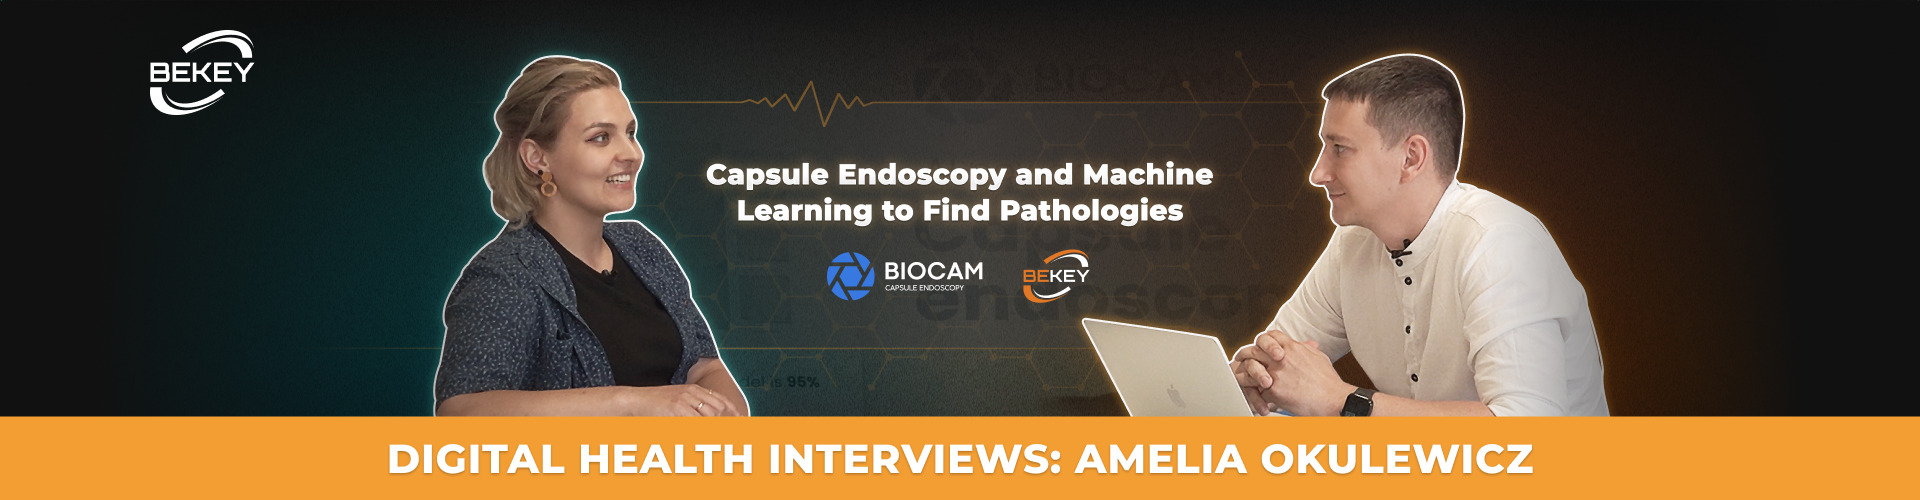 Digital Health Interviews: Amelia Okulewicz, “BioCam” — Capsule Endoscopy and Machine Learning to Find Pathologies - image